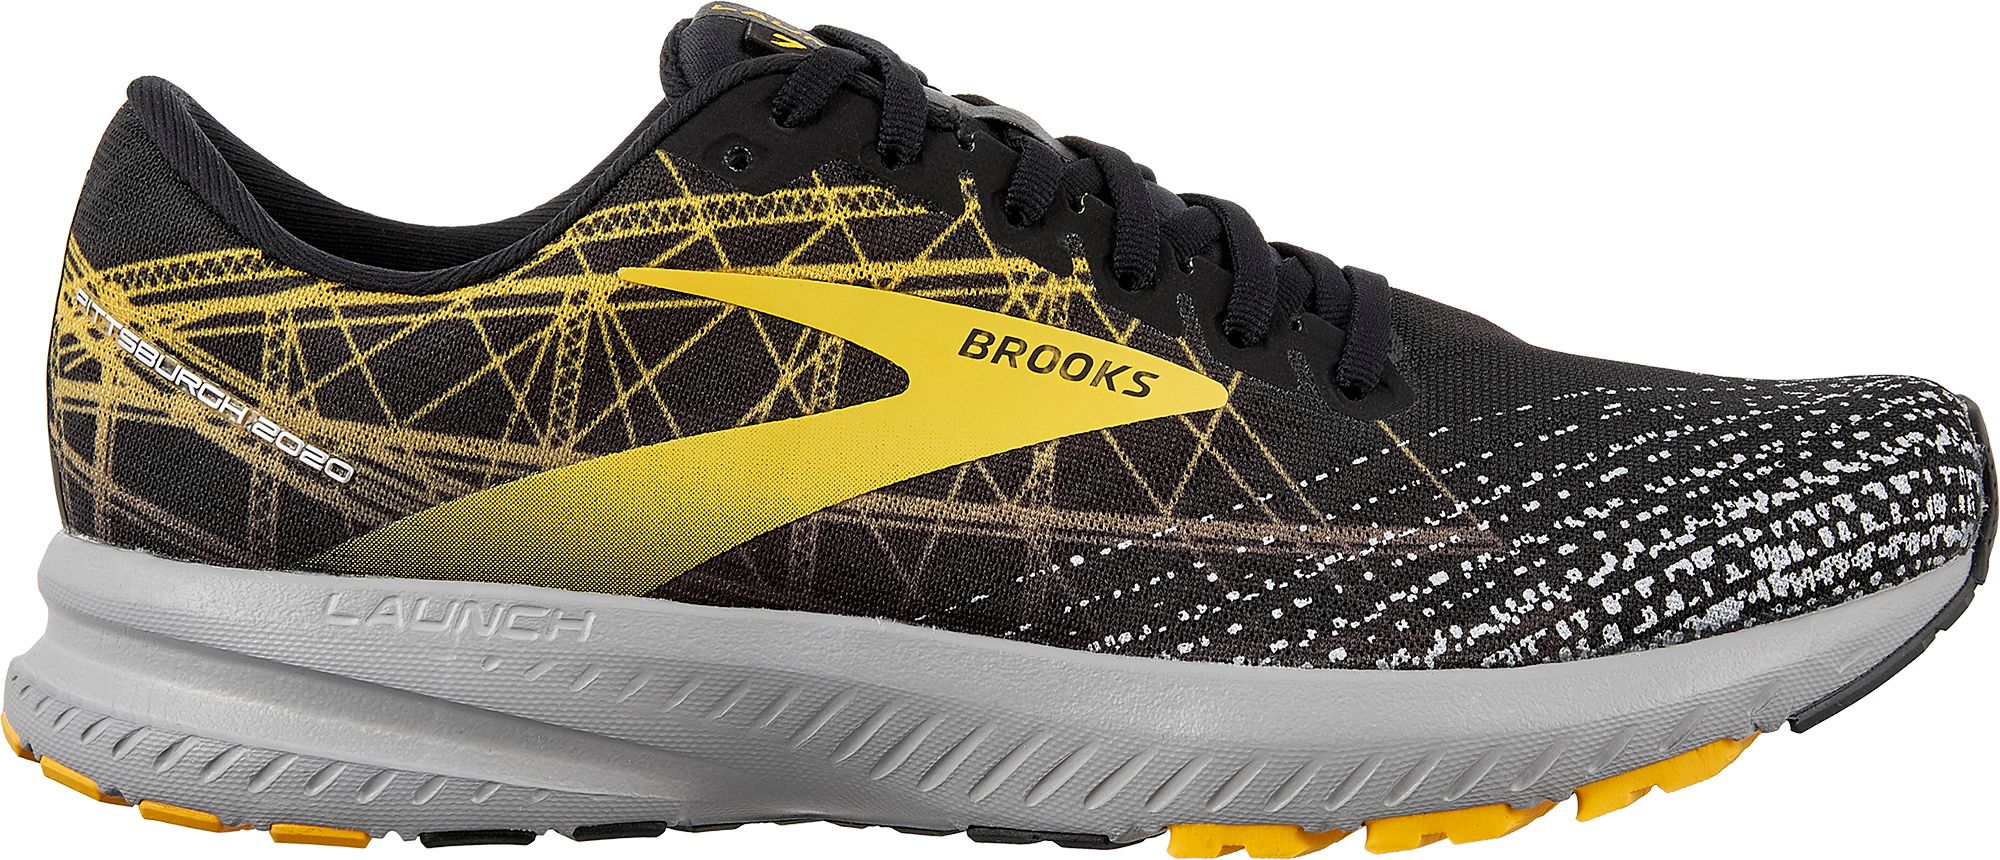 brooks men's pittsburgh launch 6 running shoes